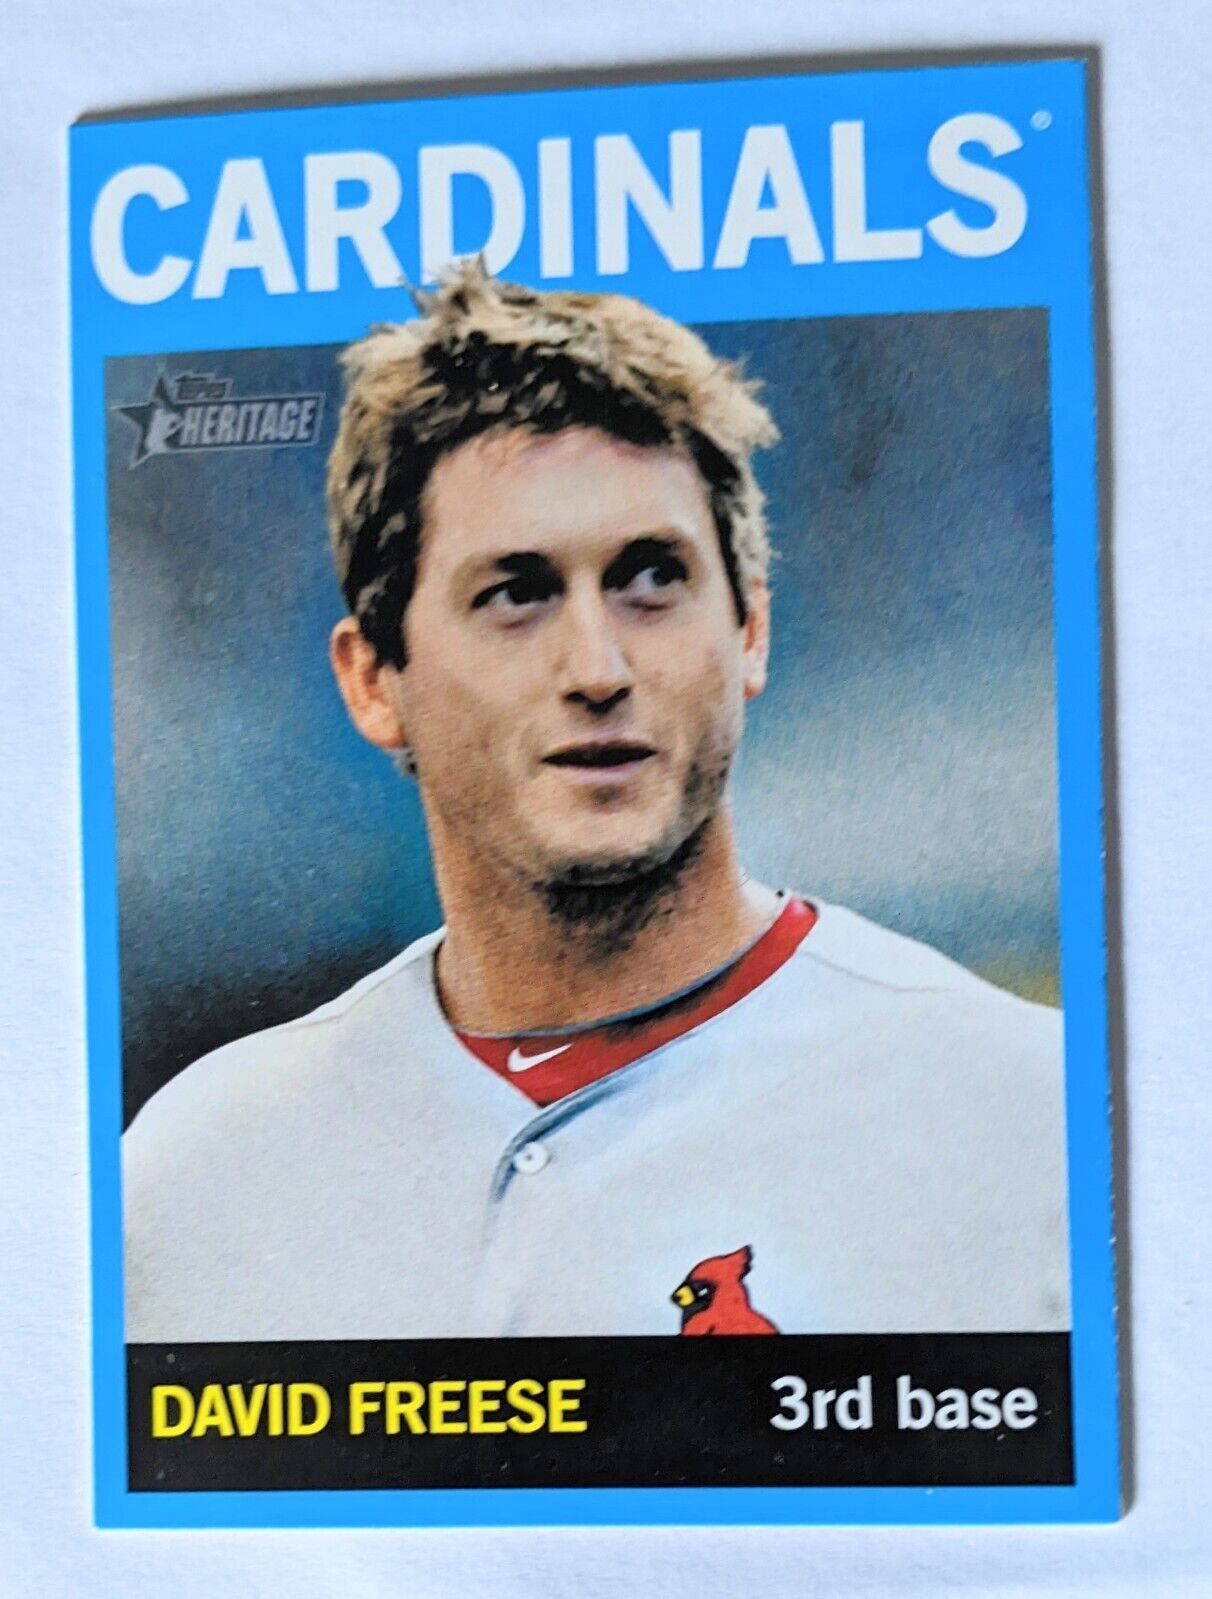 2013 Topps Heritage David Freese #160 SP Walmart blue parallel, Cardinals